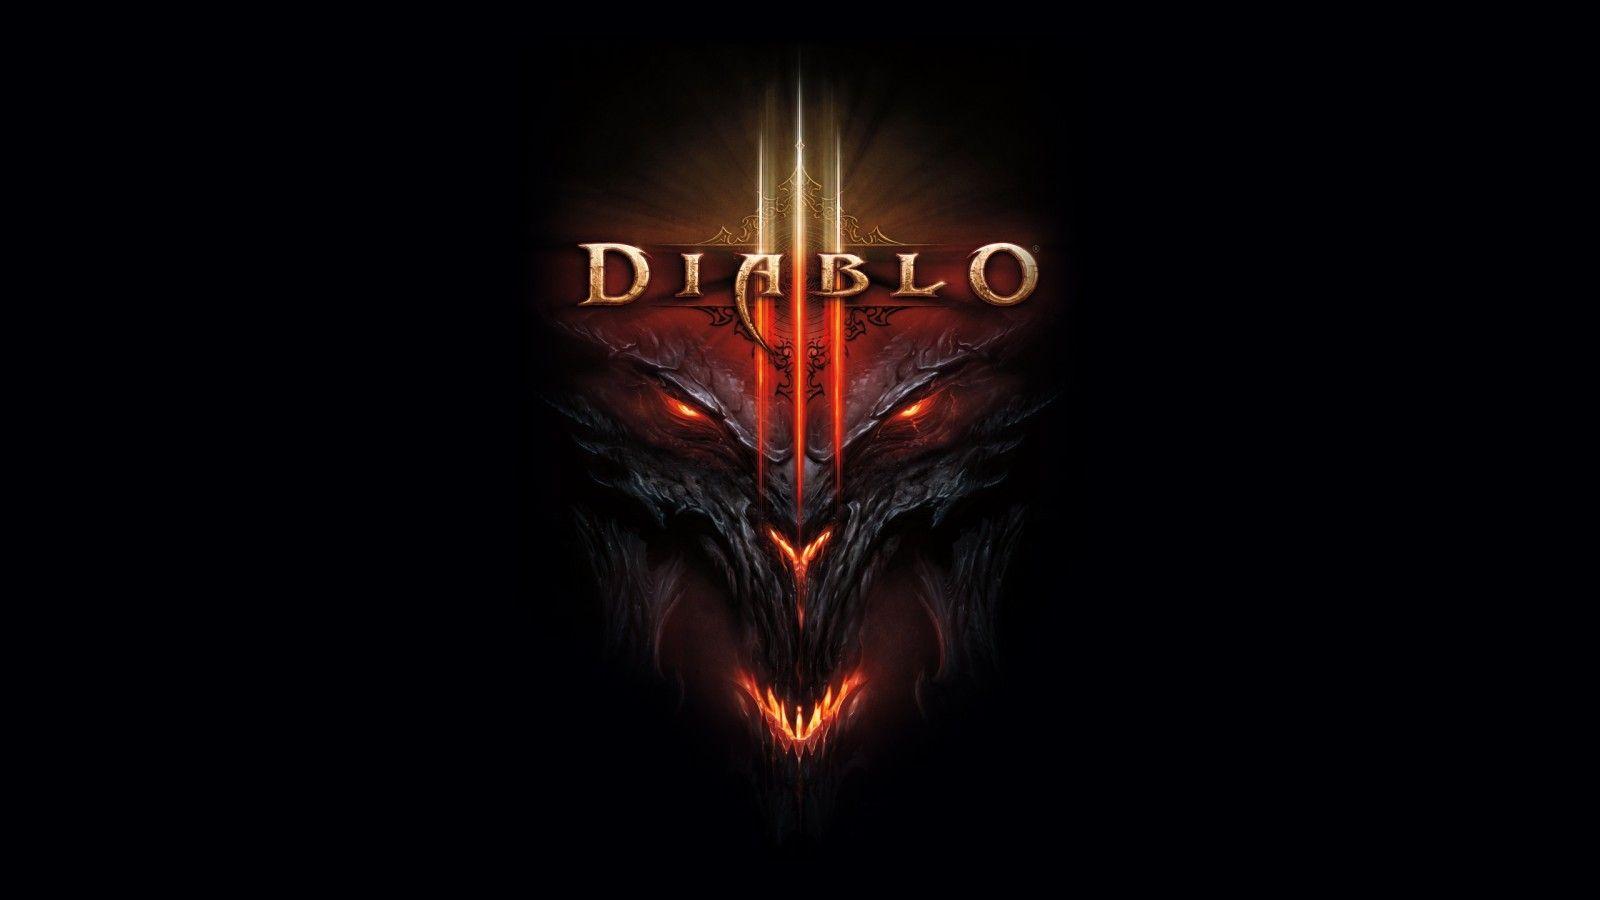 Diablo 3 widescreen wallpaper. Wide